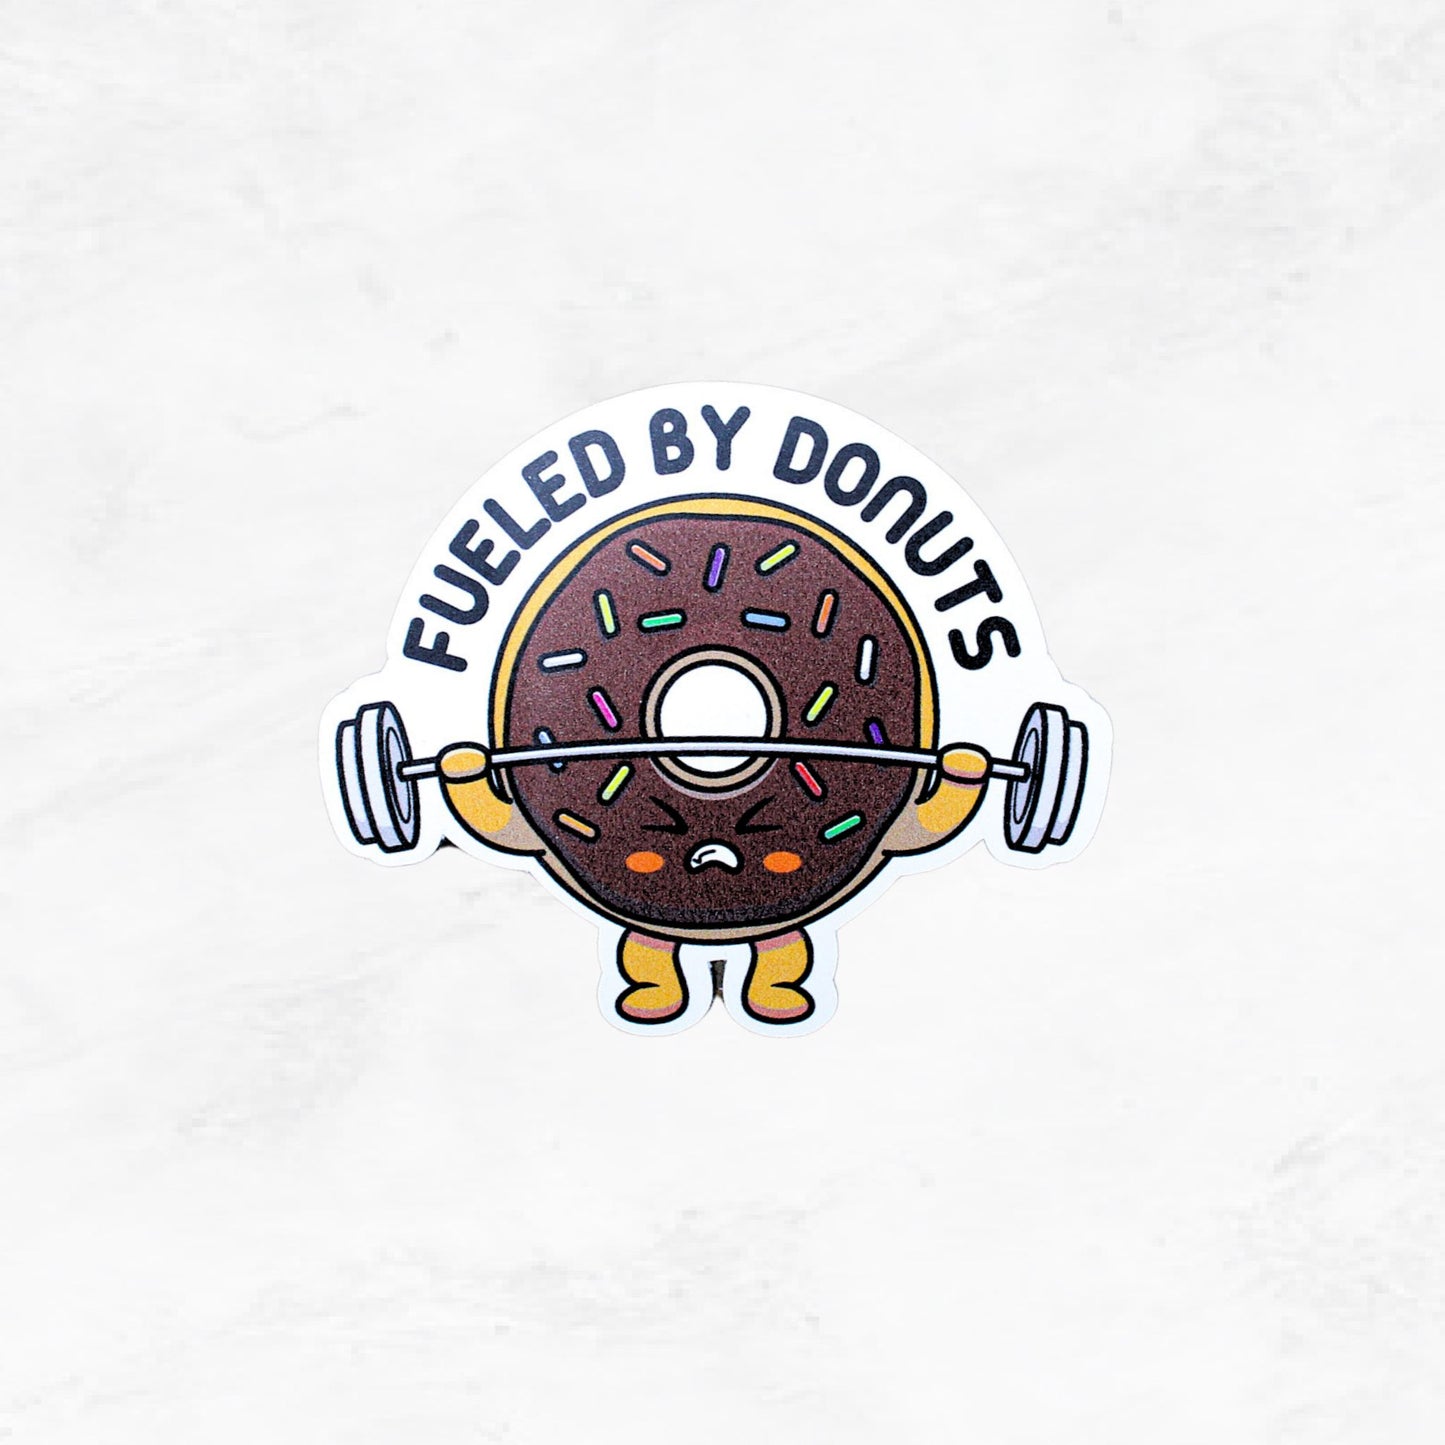 Sandy's Donuts Decals